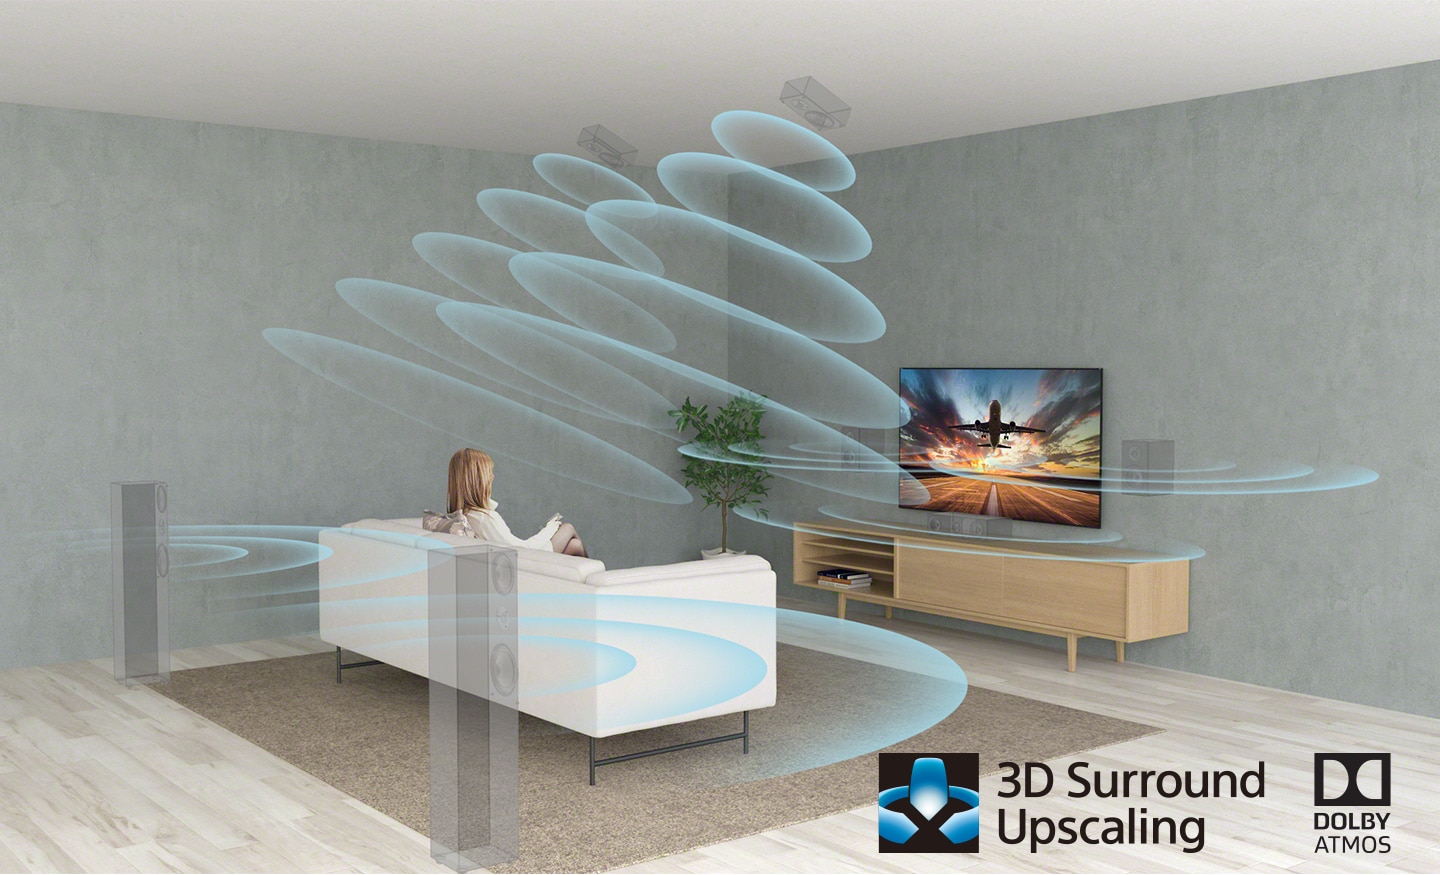 تکنولوژی 3D Surround Upscaling در تلویزیون 55X9000J